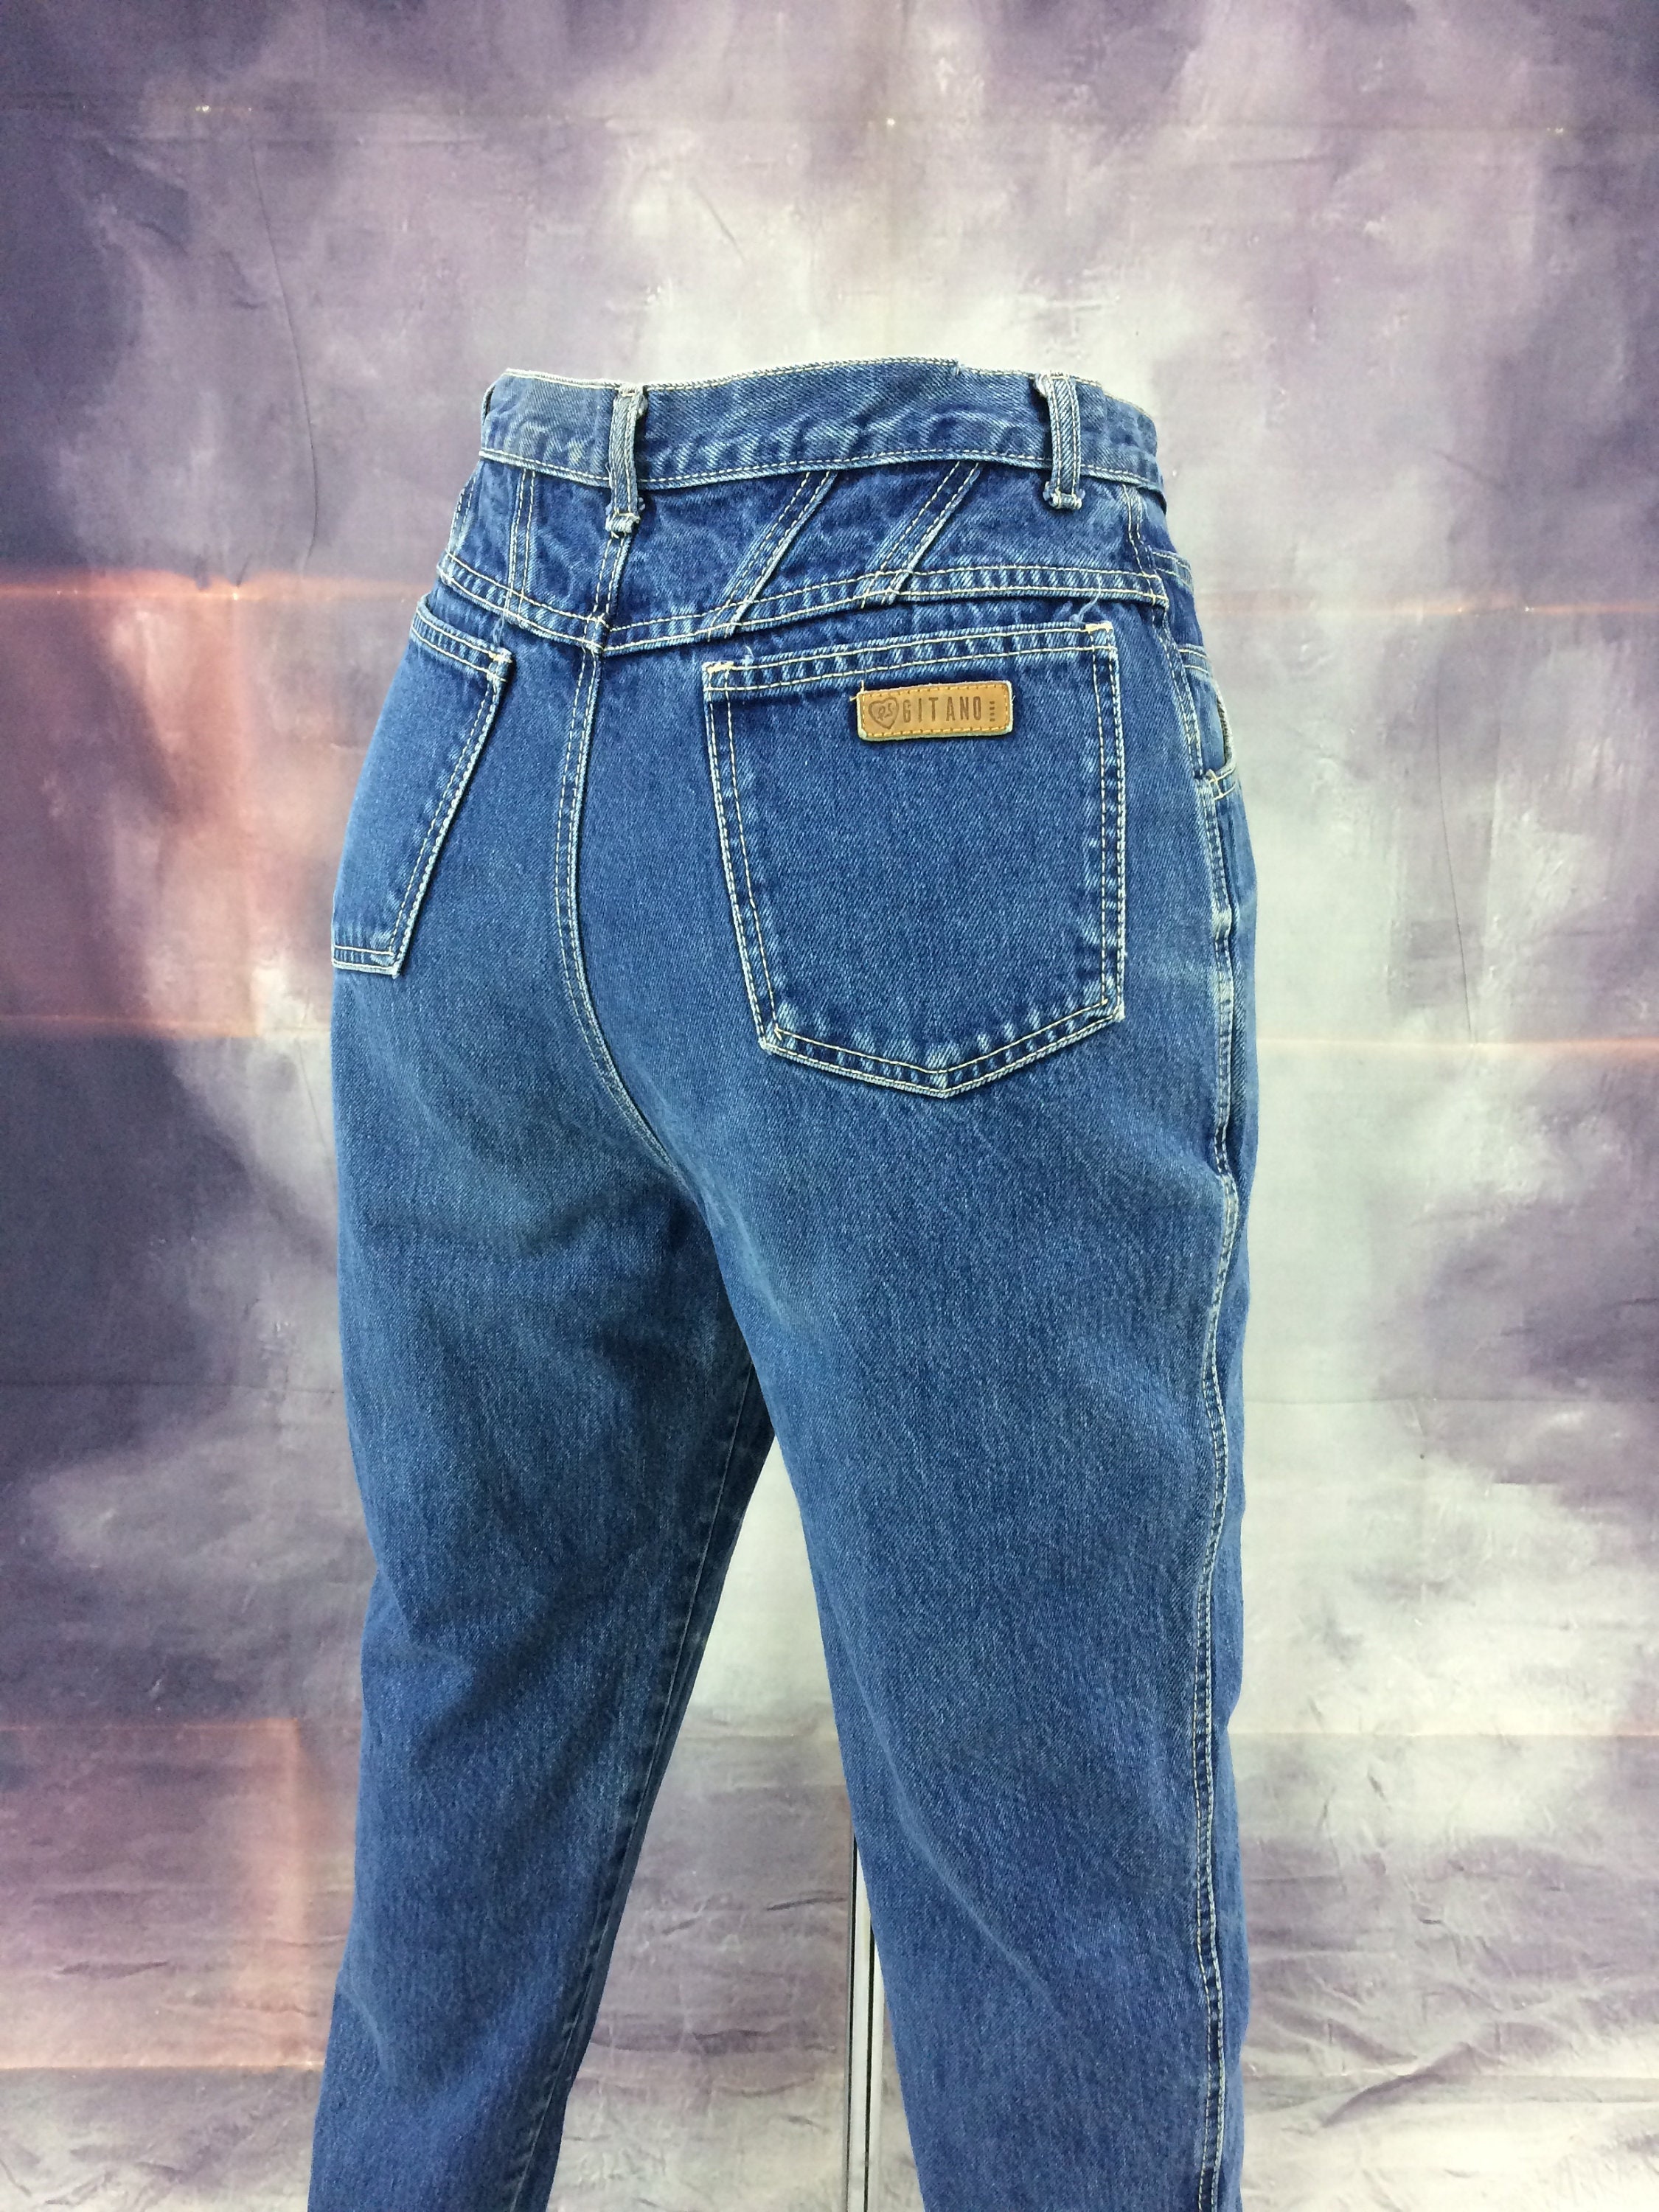 Sz 30 Vintage Gitano Jeans Women's Hourglass Jeans W30 L31 Classic Mom Fit  Ultra High Waisted 90s Distressed Boyfriends Mom Jeans Waist 30 -  UK